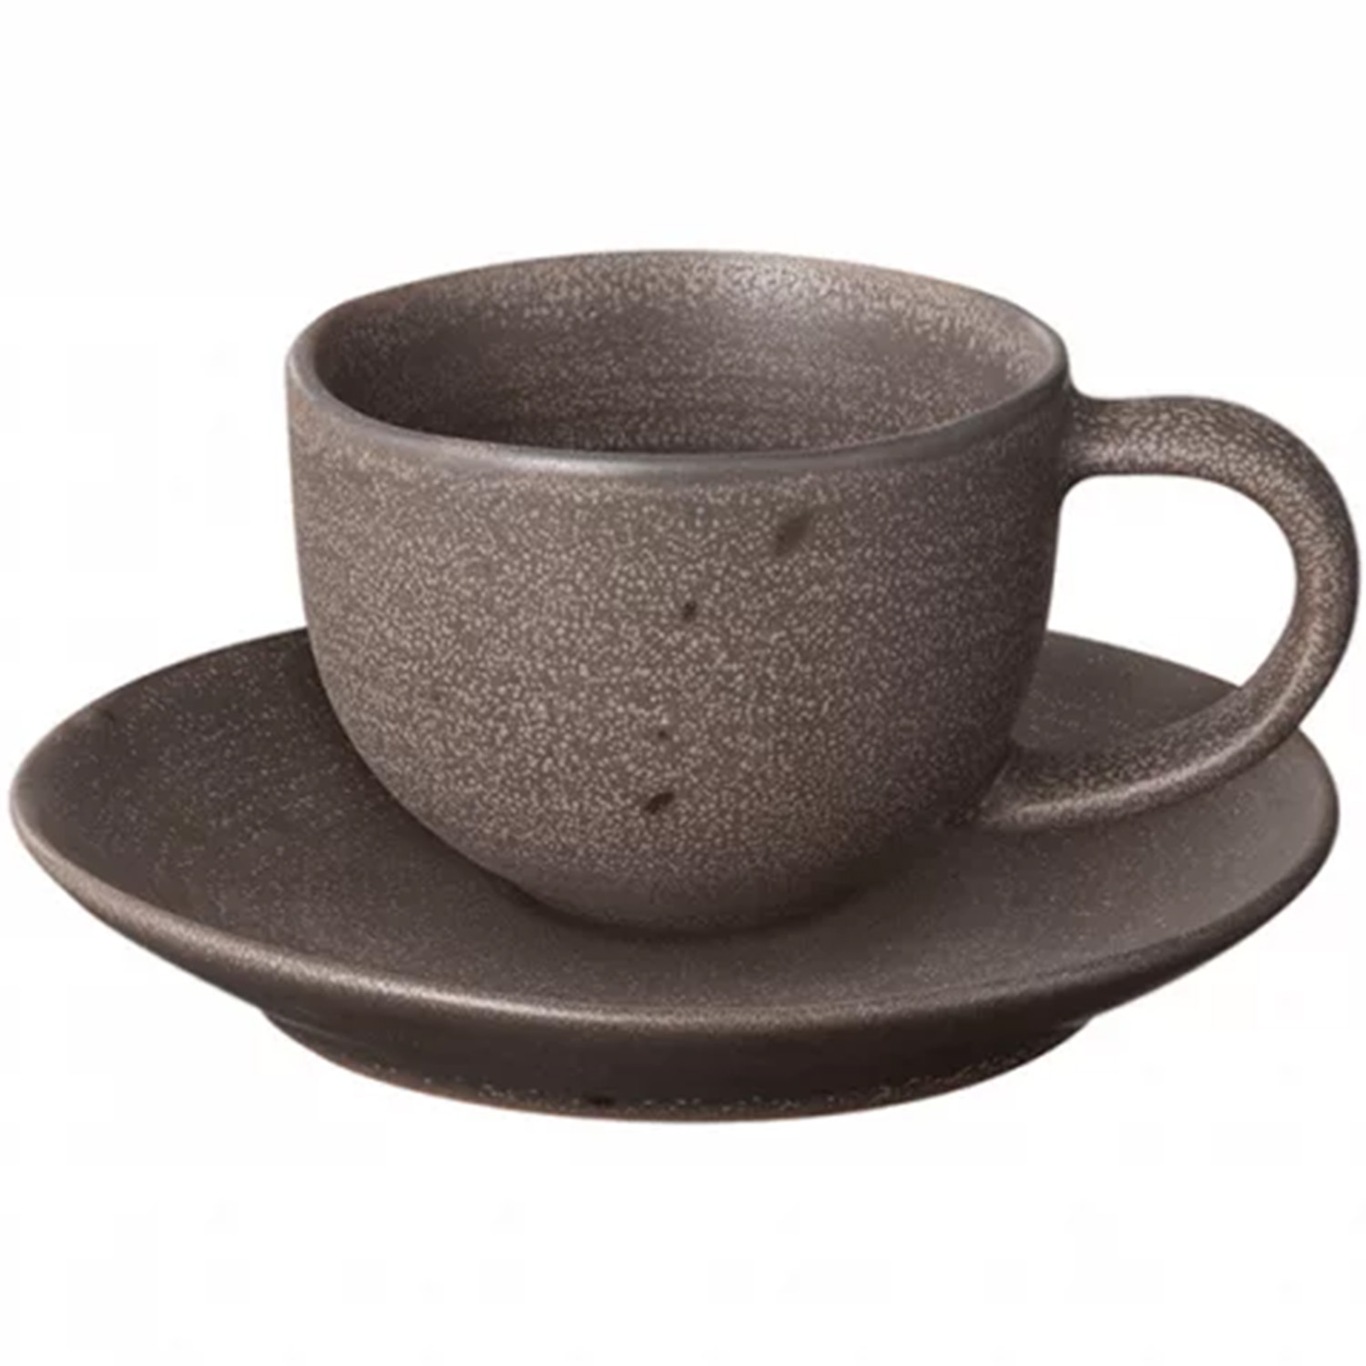 KUMI Espresso Cup With Saucer 2-pack, Espresso